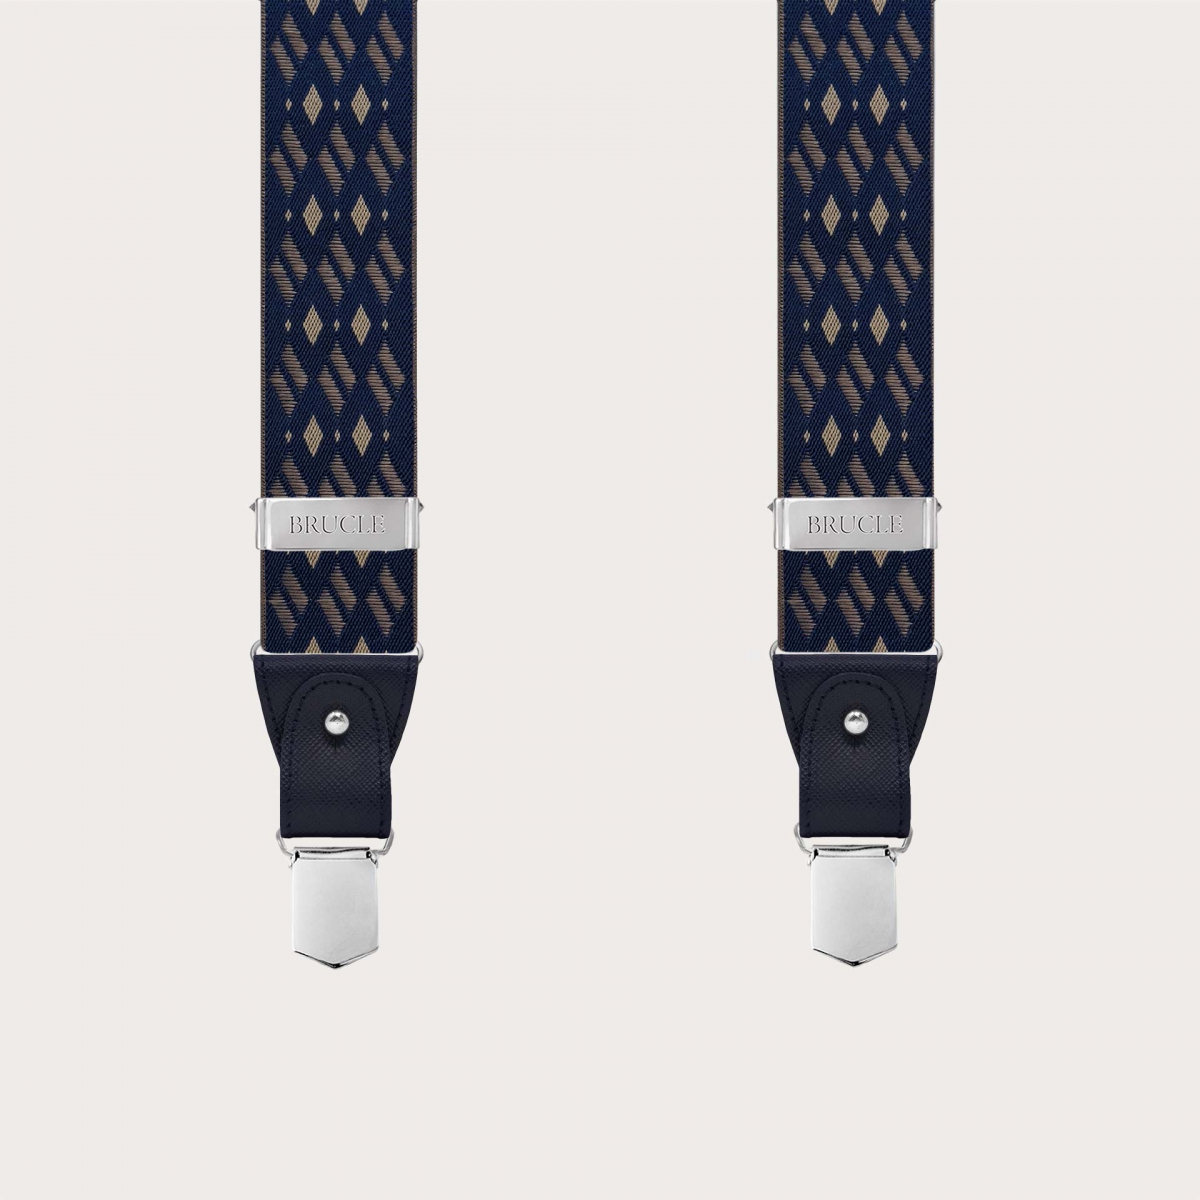 Men's dual-use navy blue and beige diamond pattern suspenders